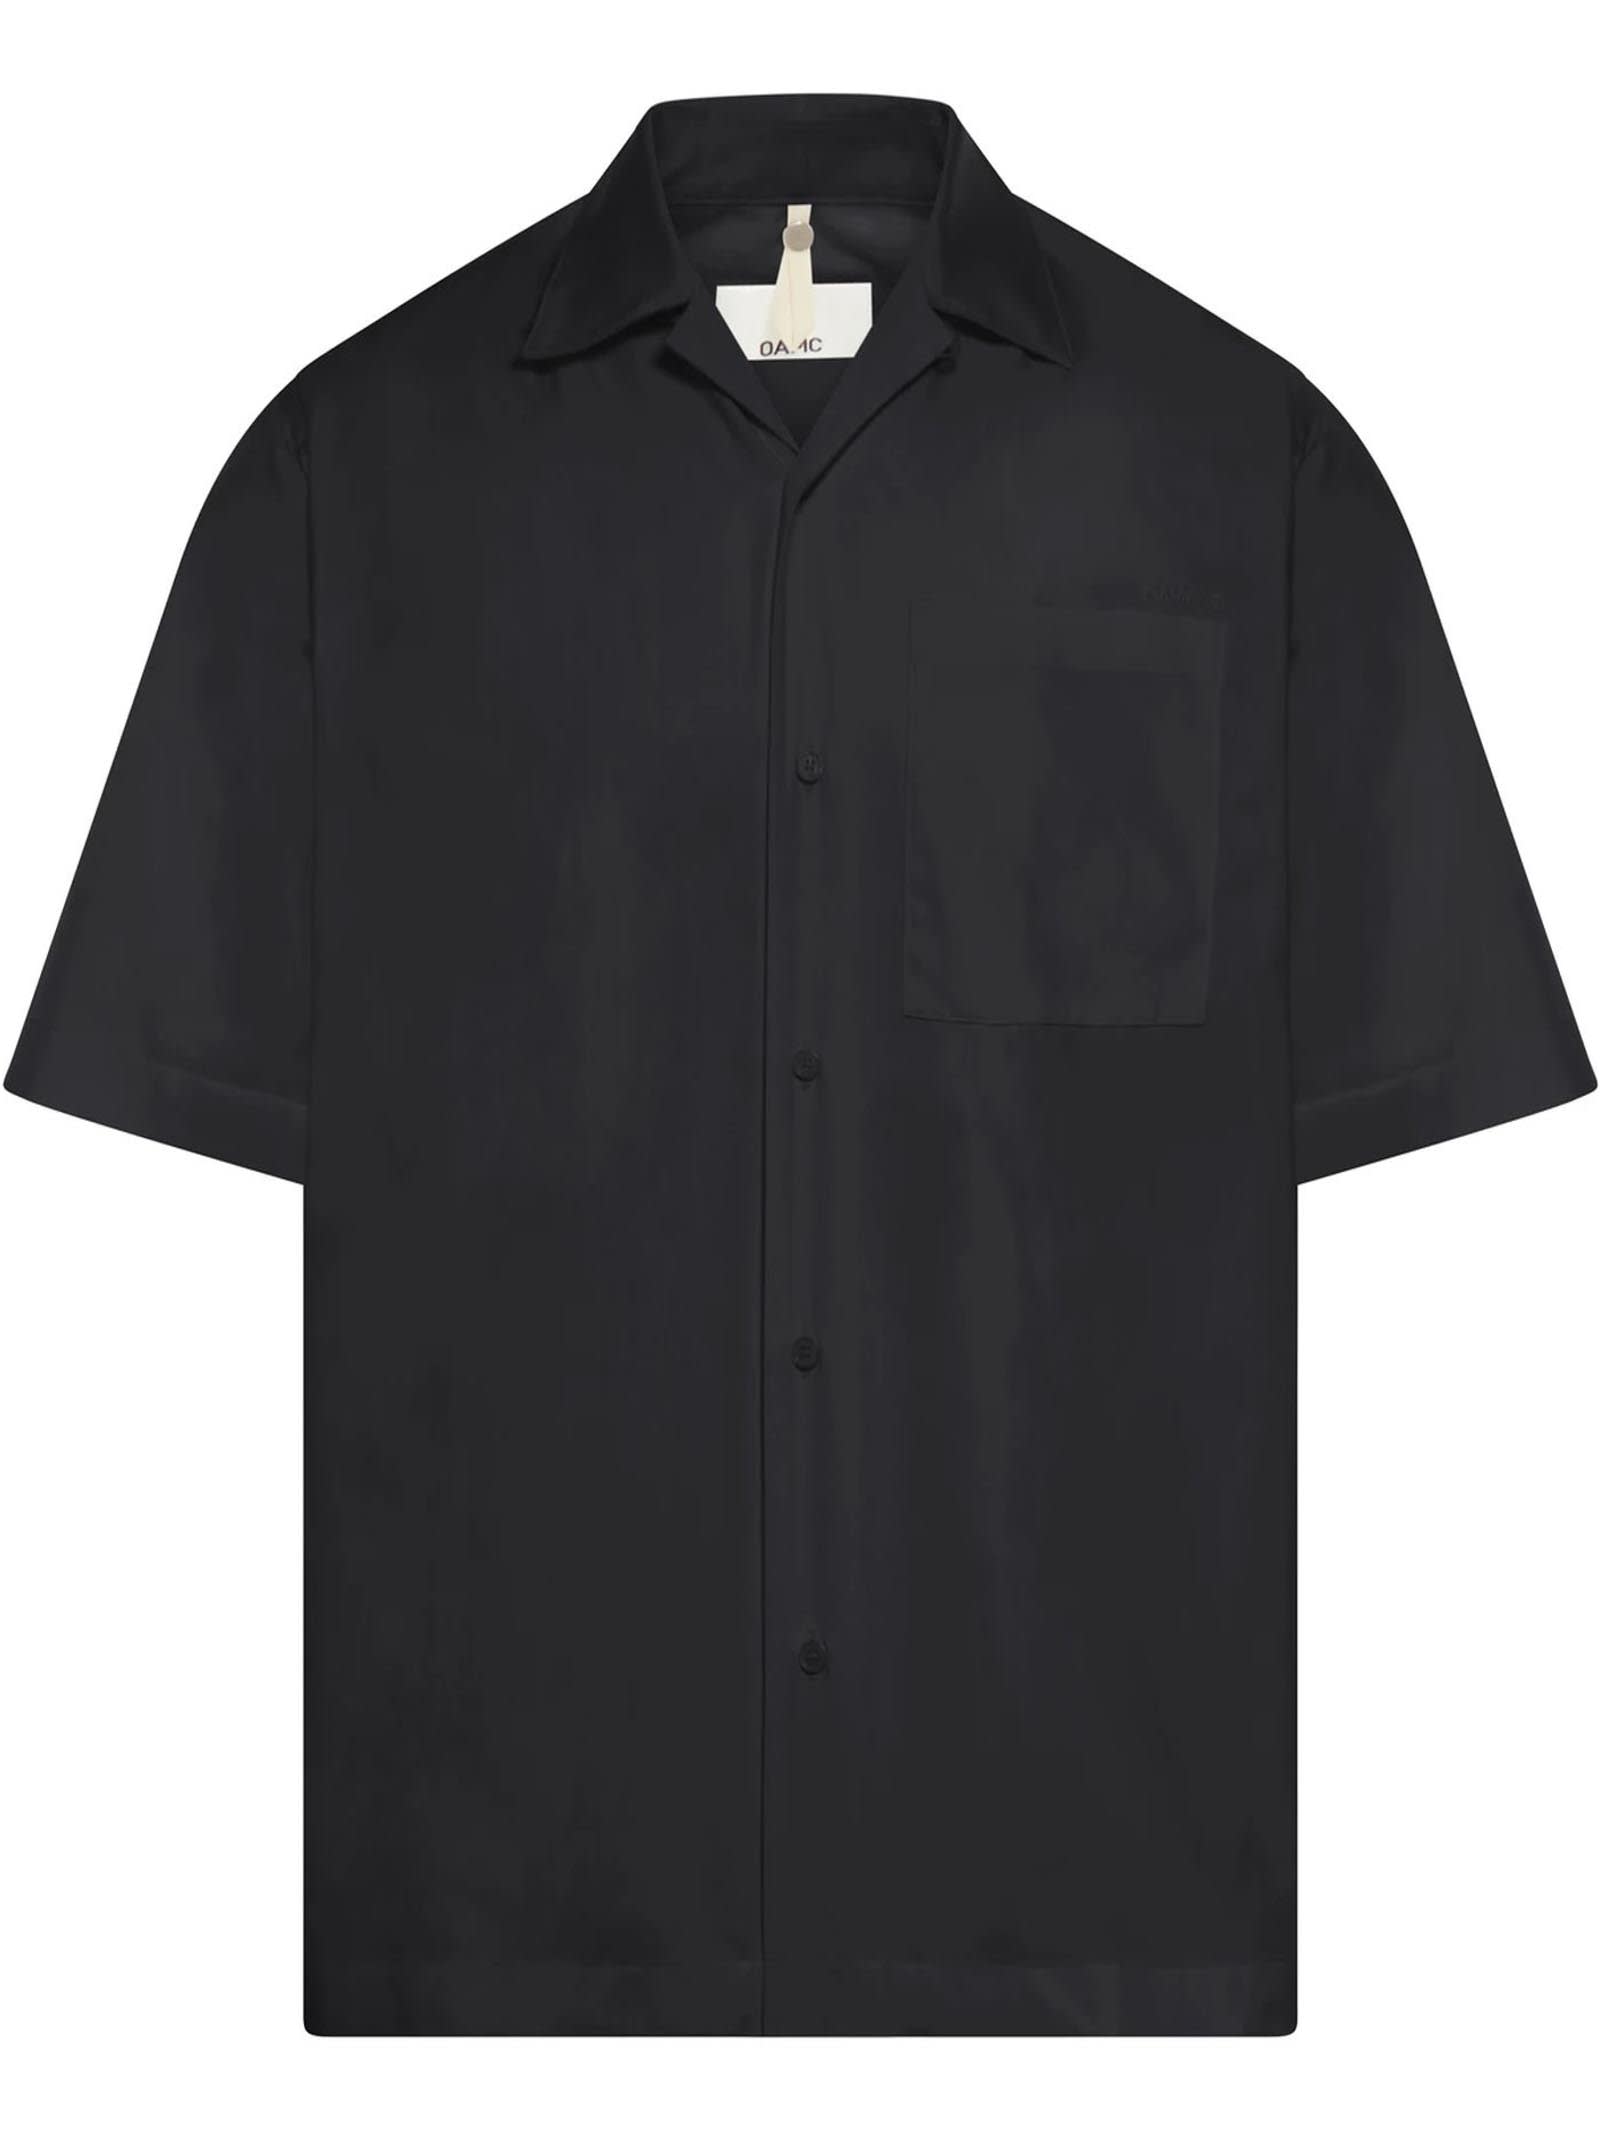 Black Cotton Blend Shirt